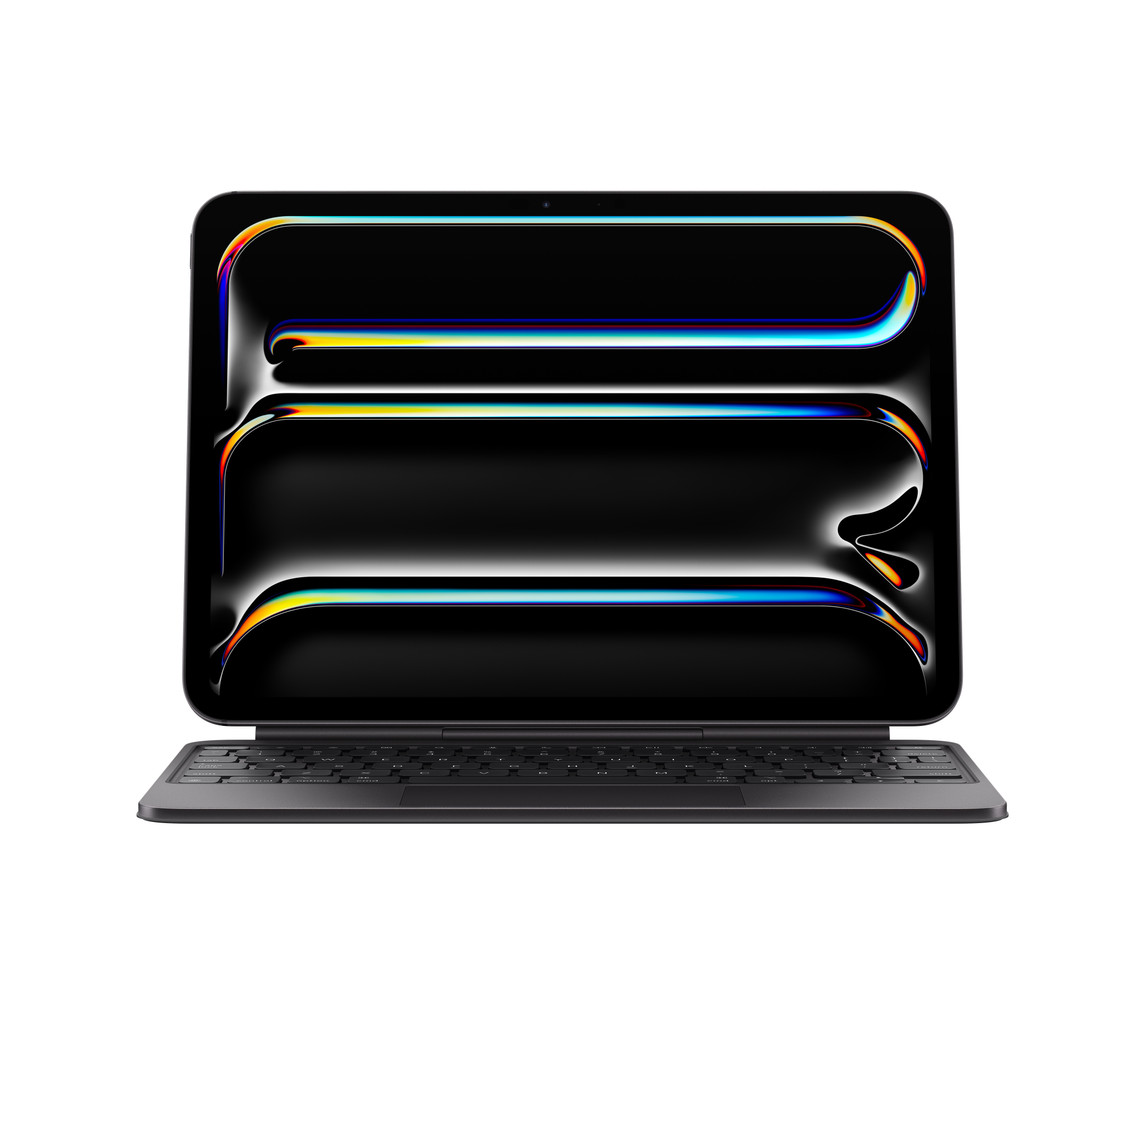 iPad Pro를 블랙 색상 Magic Keyboard에 가로 방향으로 부착한 모습